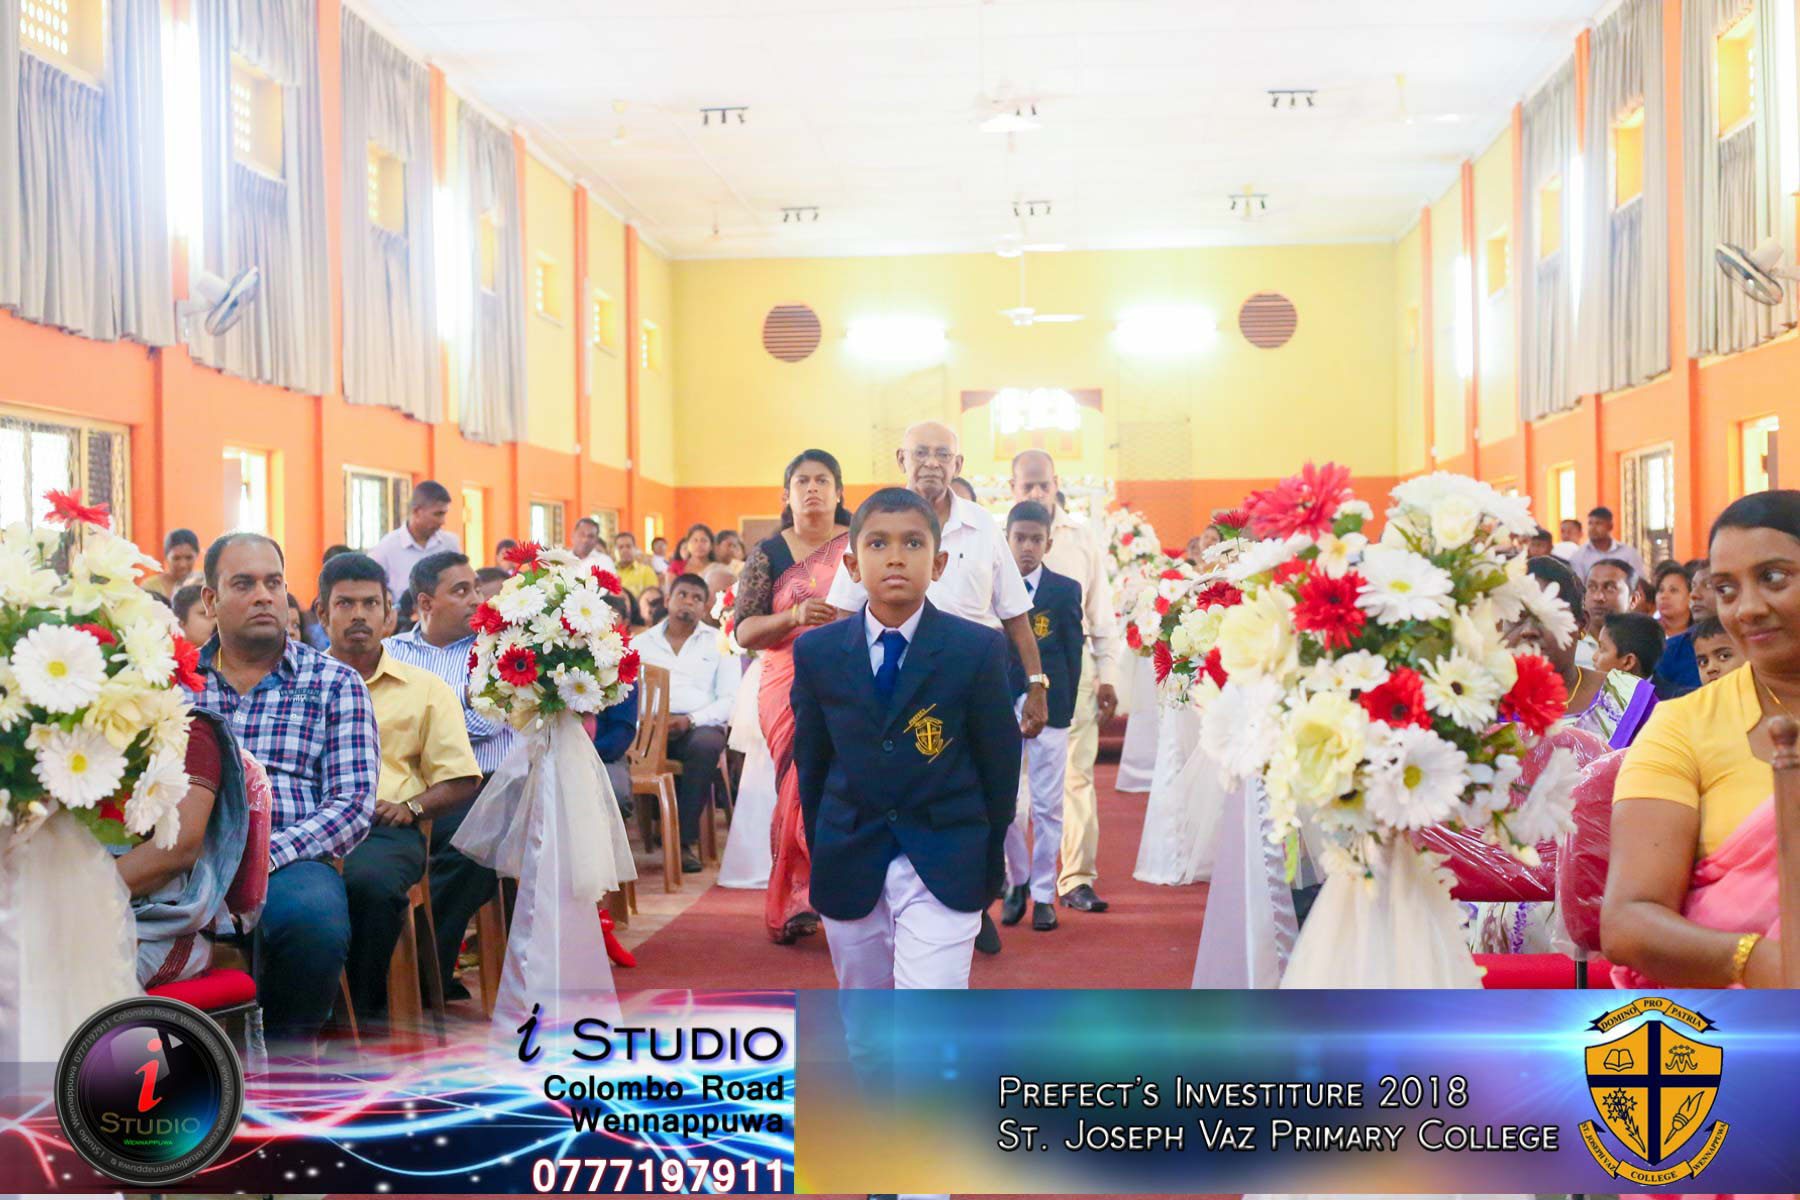 Prefects Investiture 2018( Primary Section) - St. Joseph Vaz College - Wennappuwa - Sri Lanka